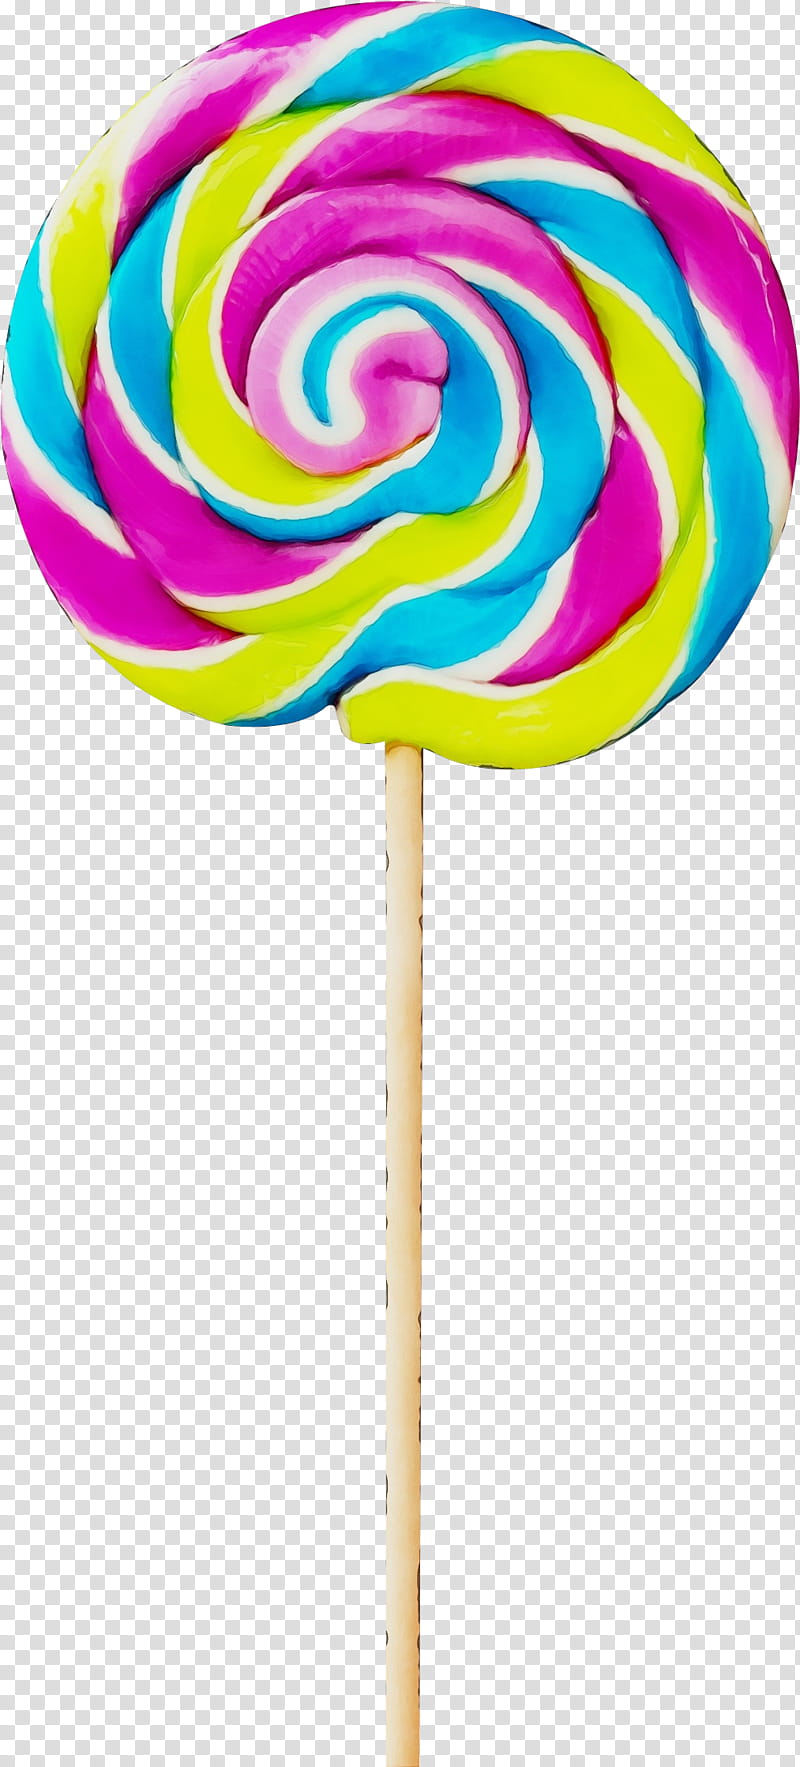 Bubble, Watercolor, Paint, Wet Ink, Lollipop, Candy, Stick Candy, Gummy Candy transparent background PNG clipart